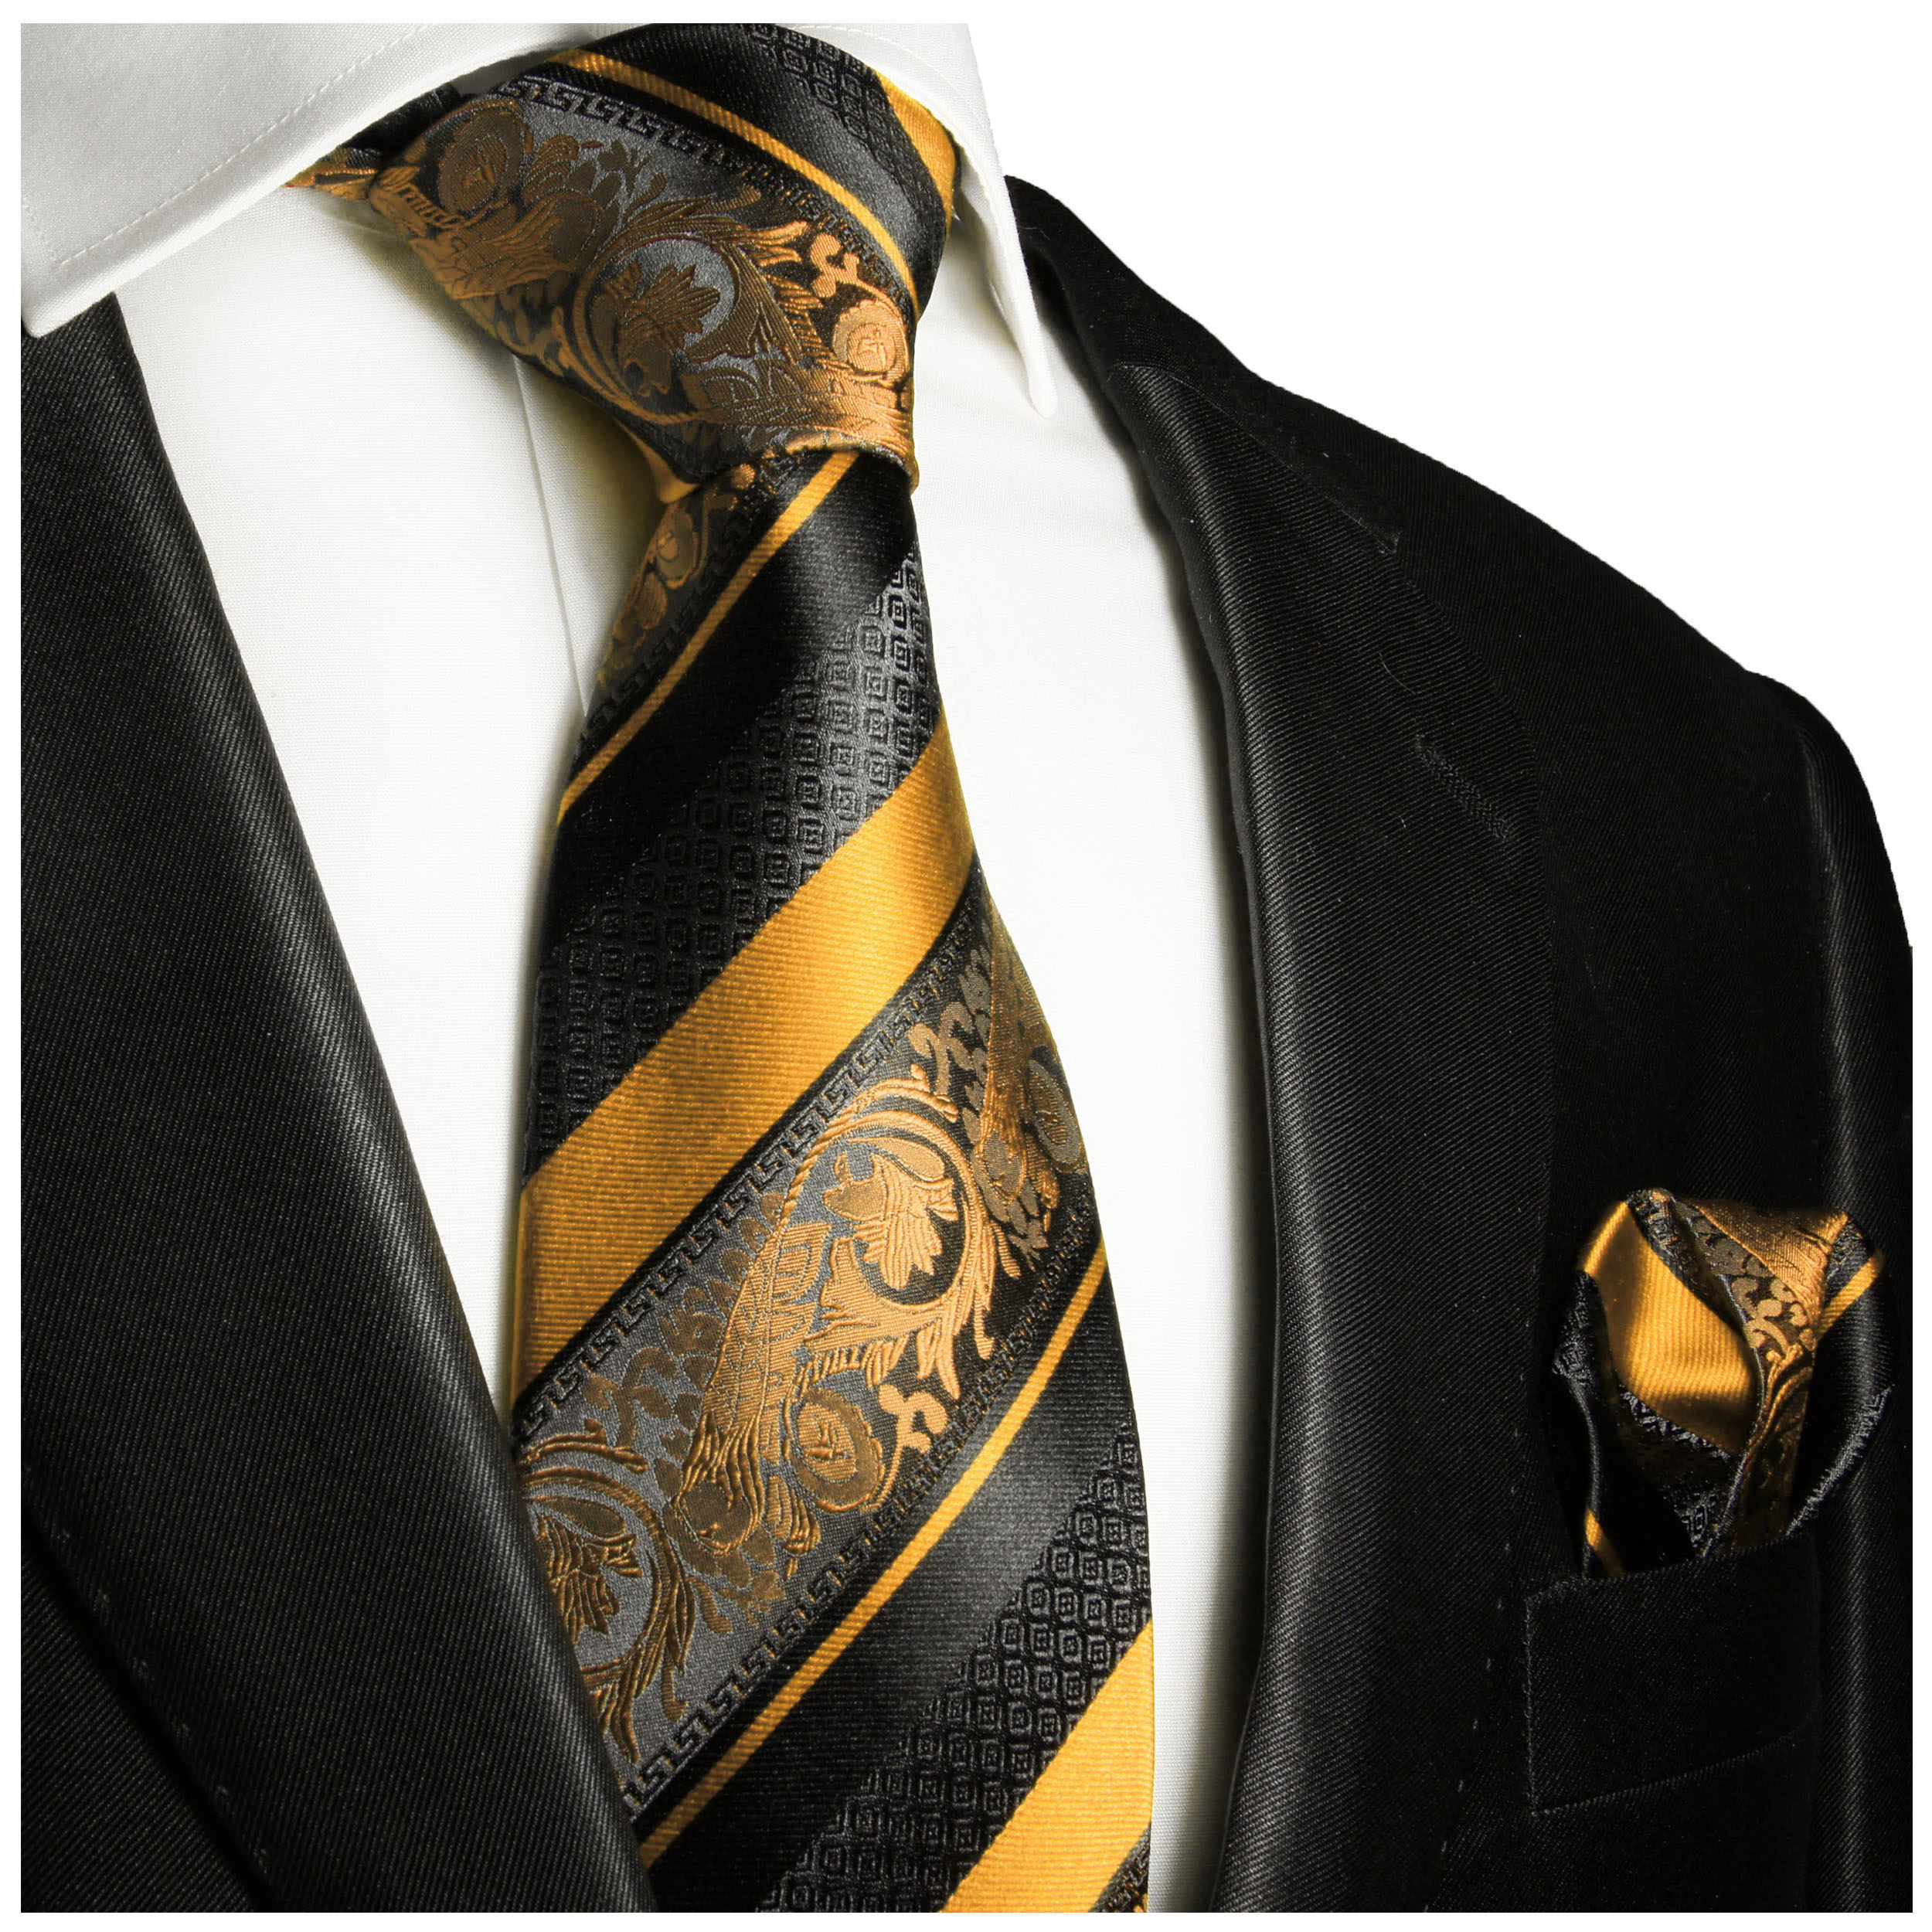 Mens Gold Tie : 8 Navy Suit And Gold Tie Combos Via Alifewellsuited ...